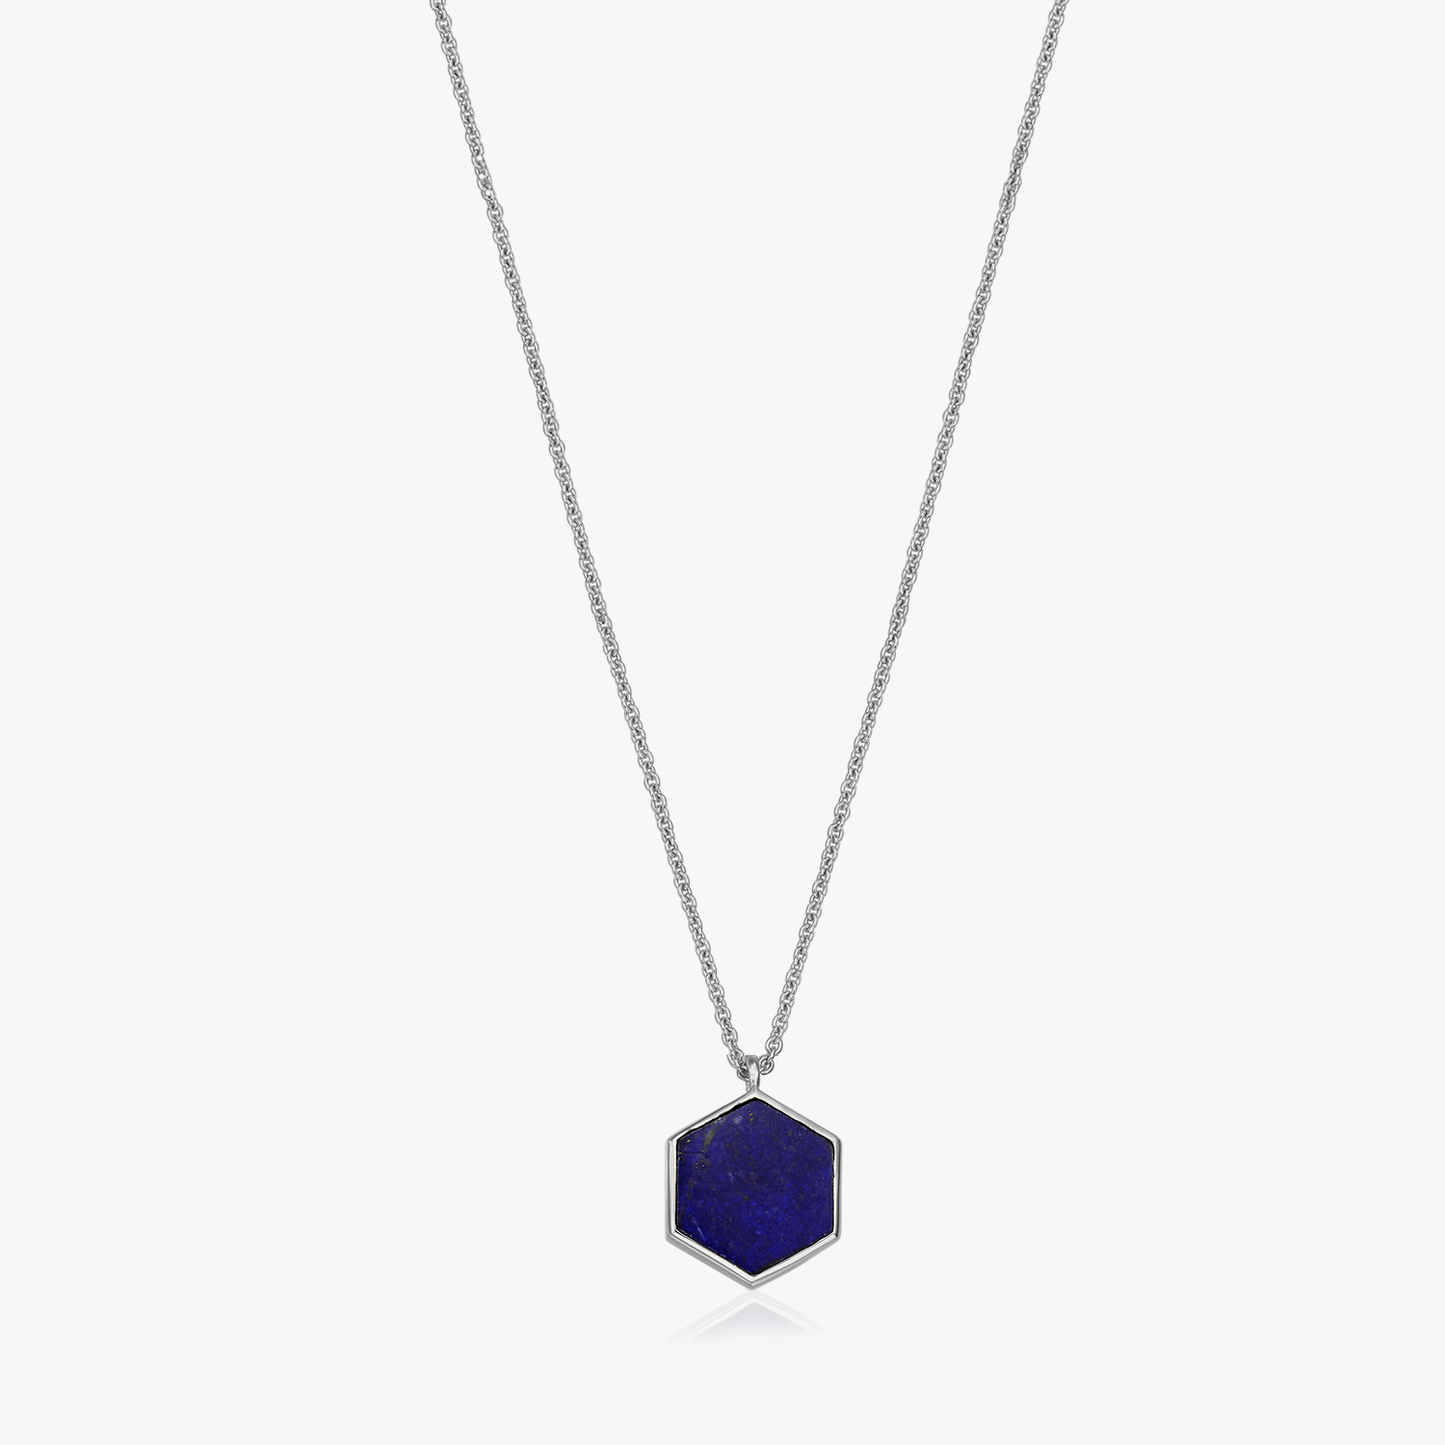 Charlotte silver necklace - Lapis Lazuli